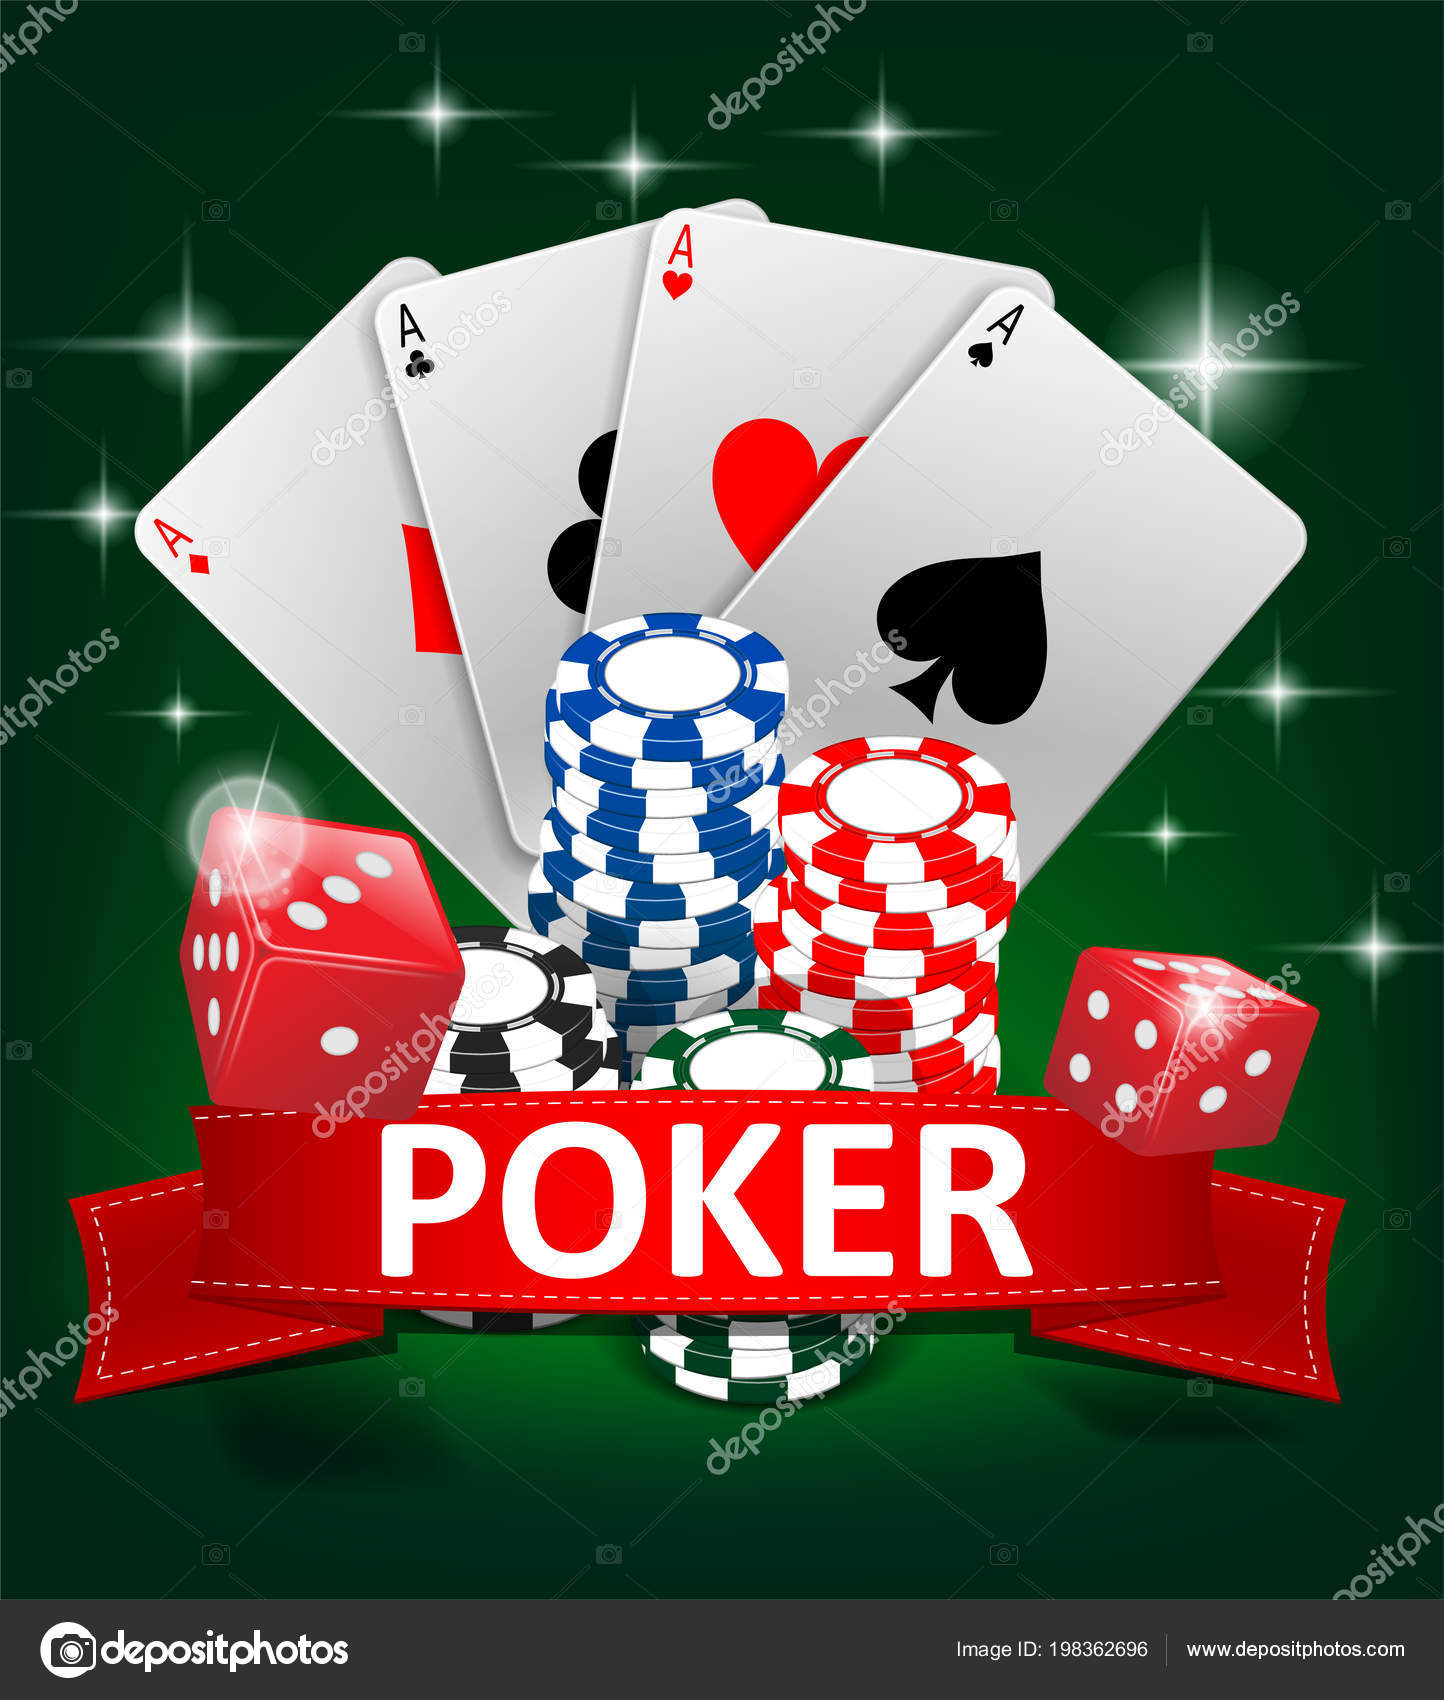 Online Slots Casino Banner Stock Illustration - Download Image Now